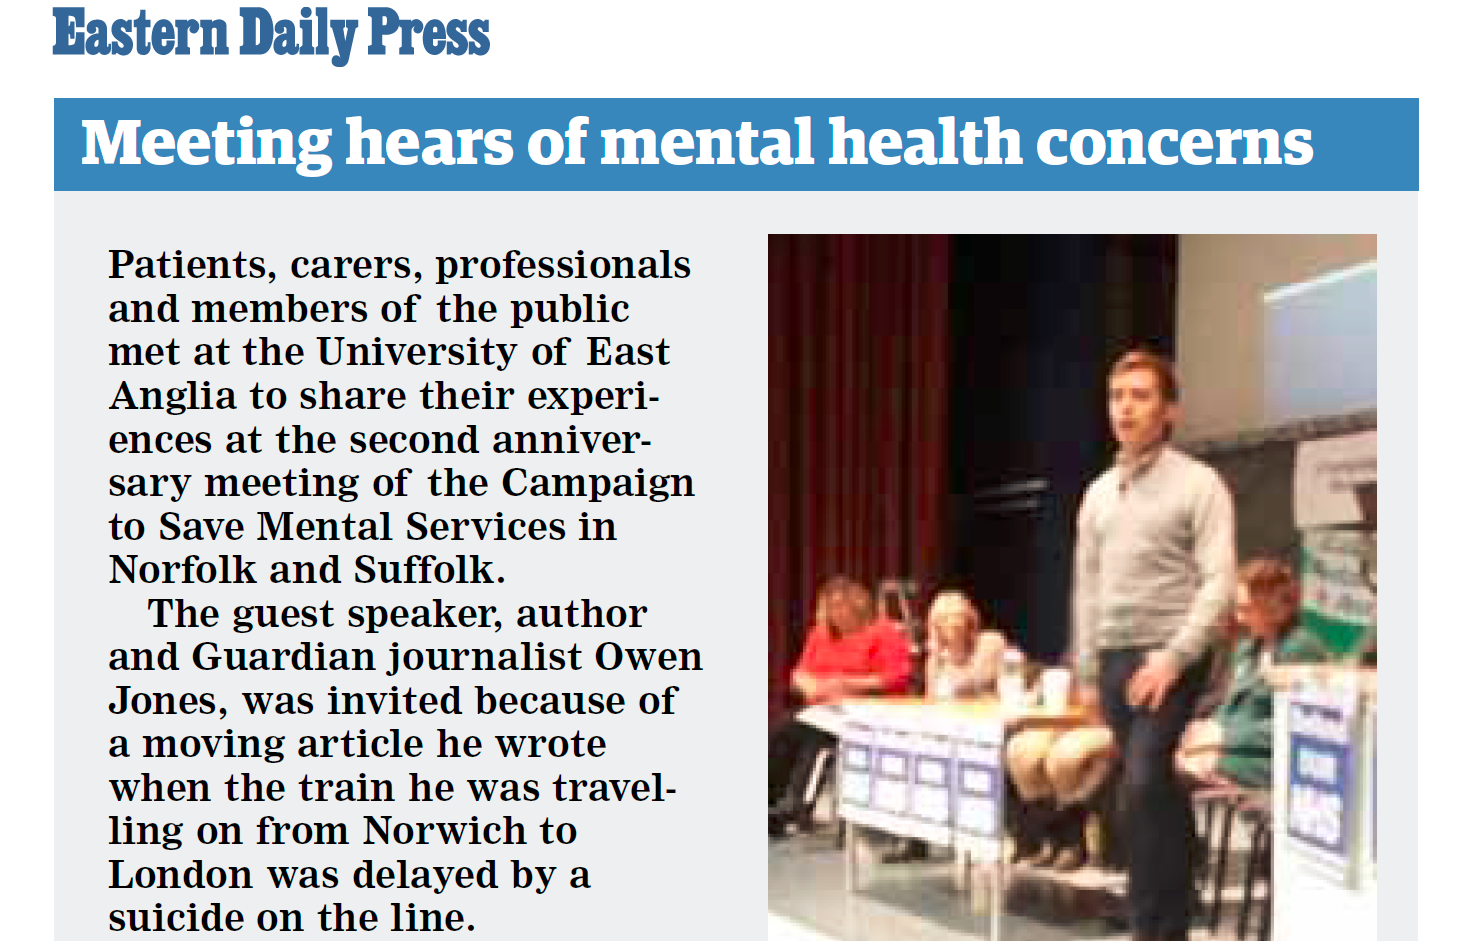 EDP Meeting hears of mental health concerns